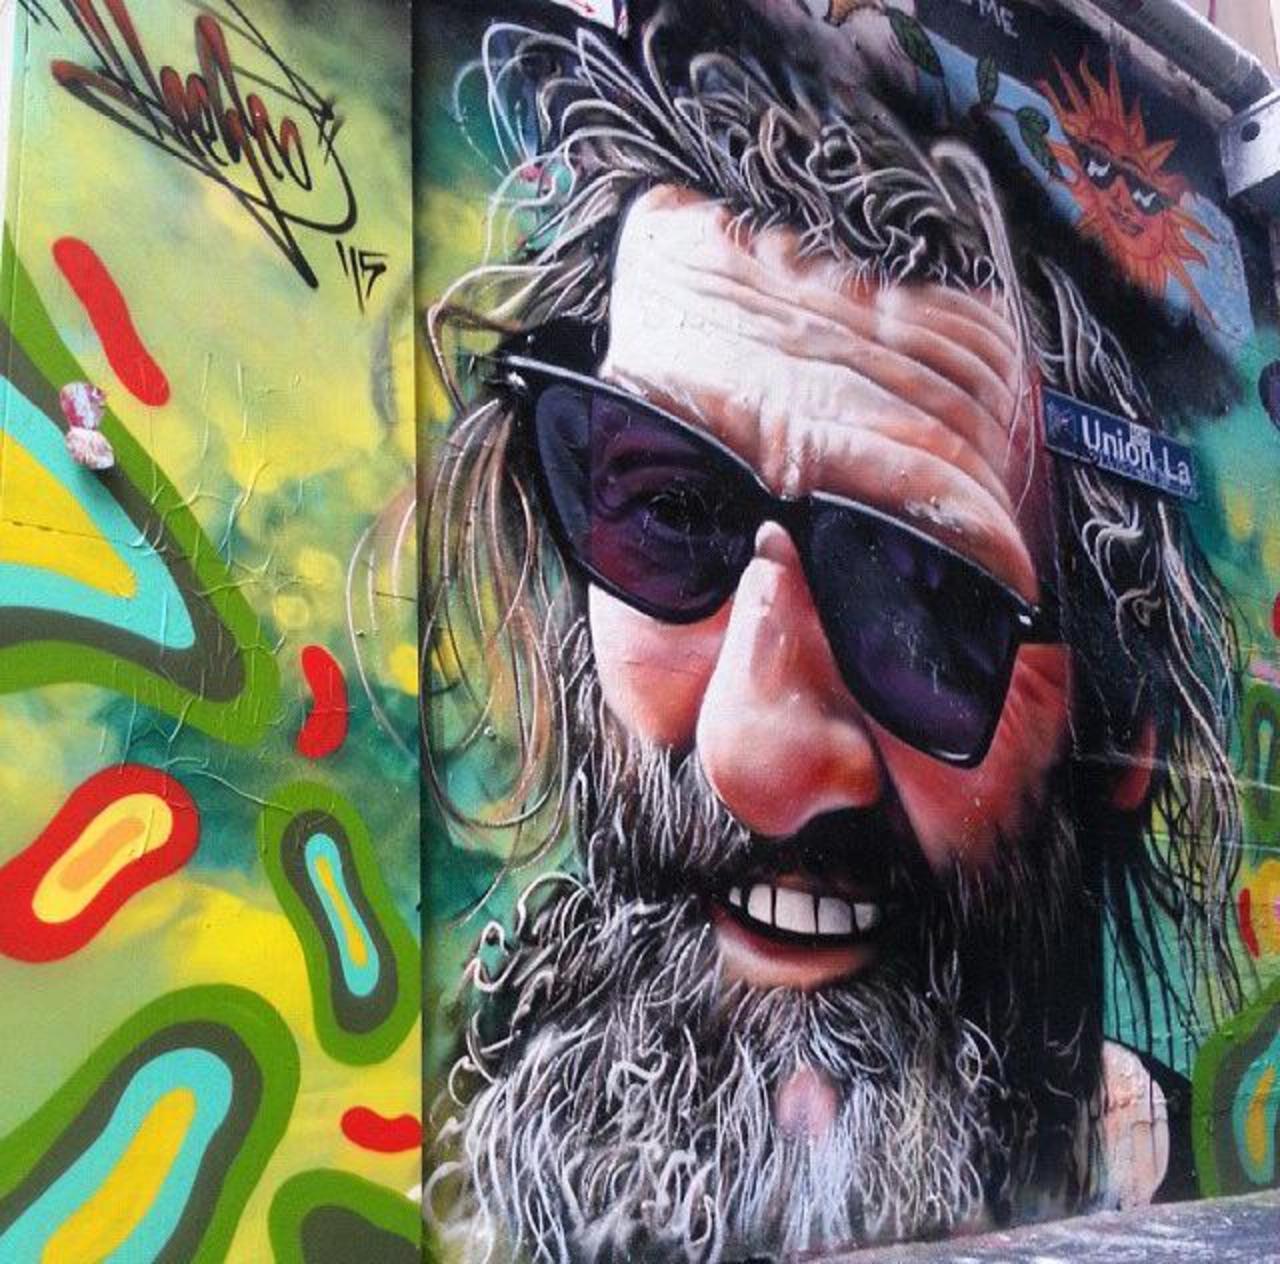 Street Art by Heesco in Melbourne 

#art #arte #graffiti #streetart http://t.co/Nya5TvZszg googlestreetart chinatoniq